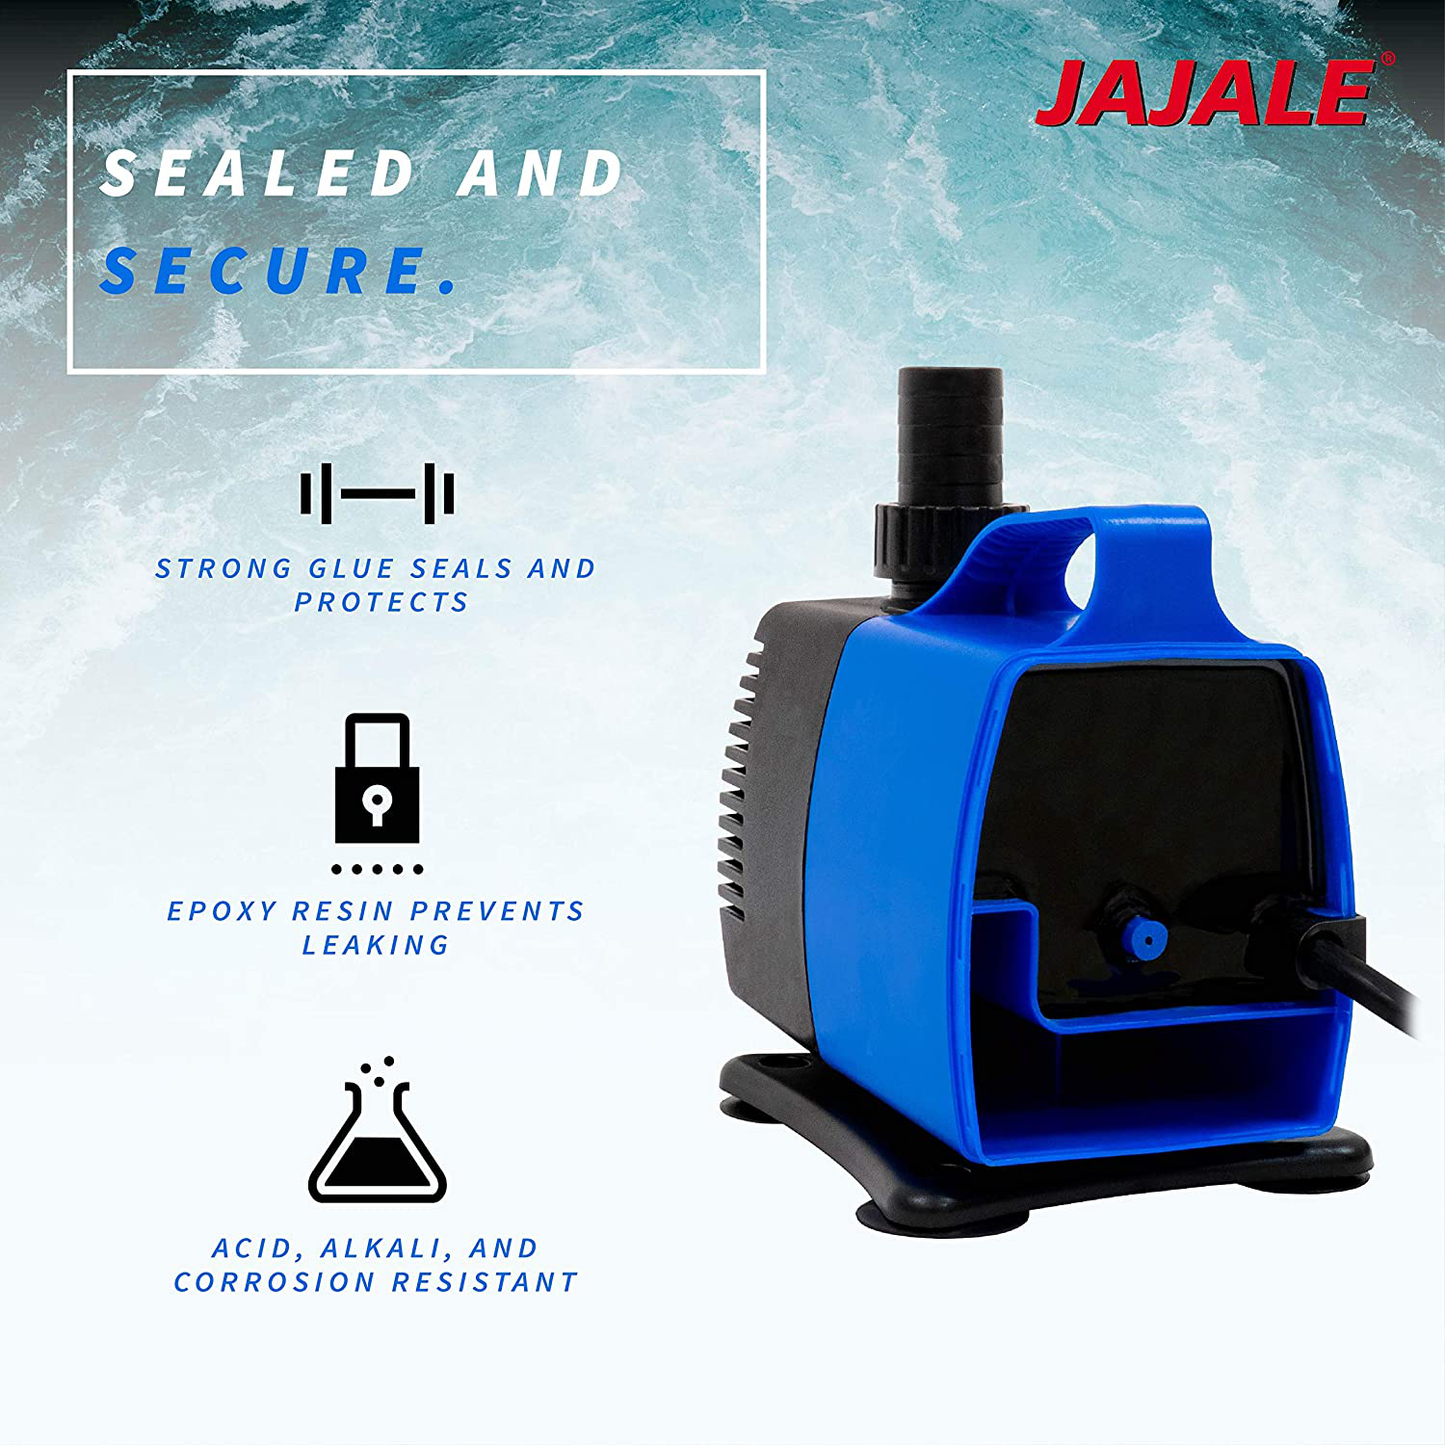 JAJALE JD Submersible Water Pump Ultra Quiet for Pond,Aquarium,Fish Tank,Fountain,Hydroponics